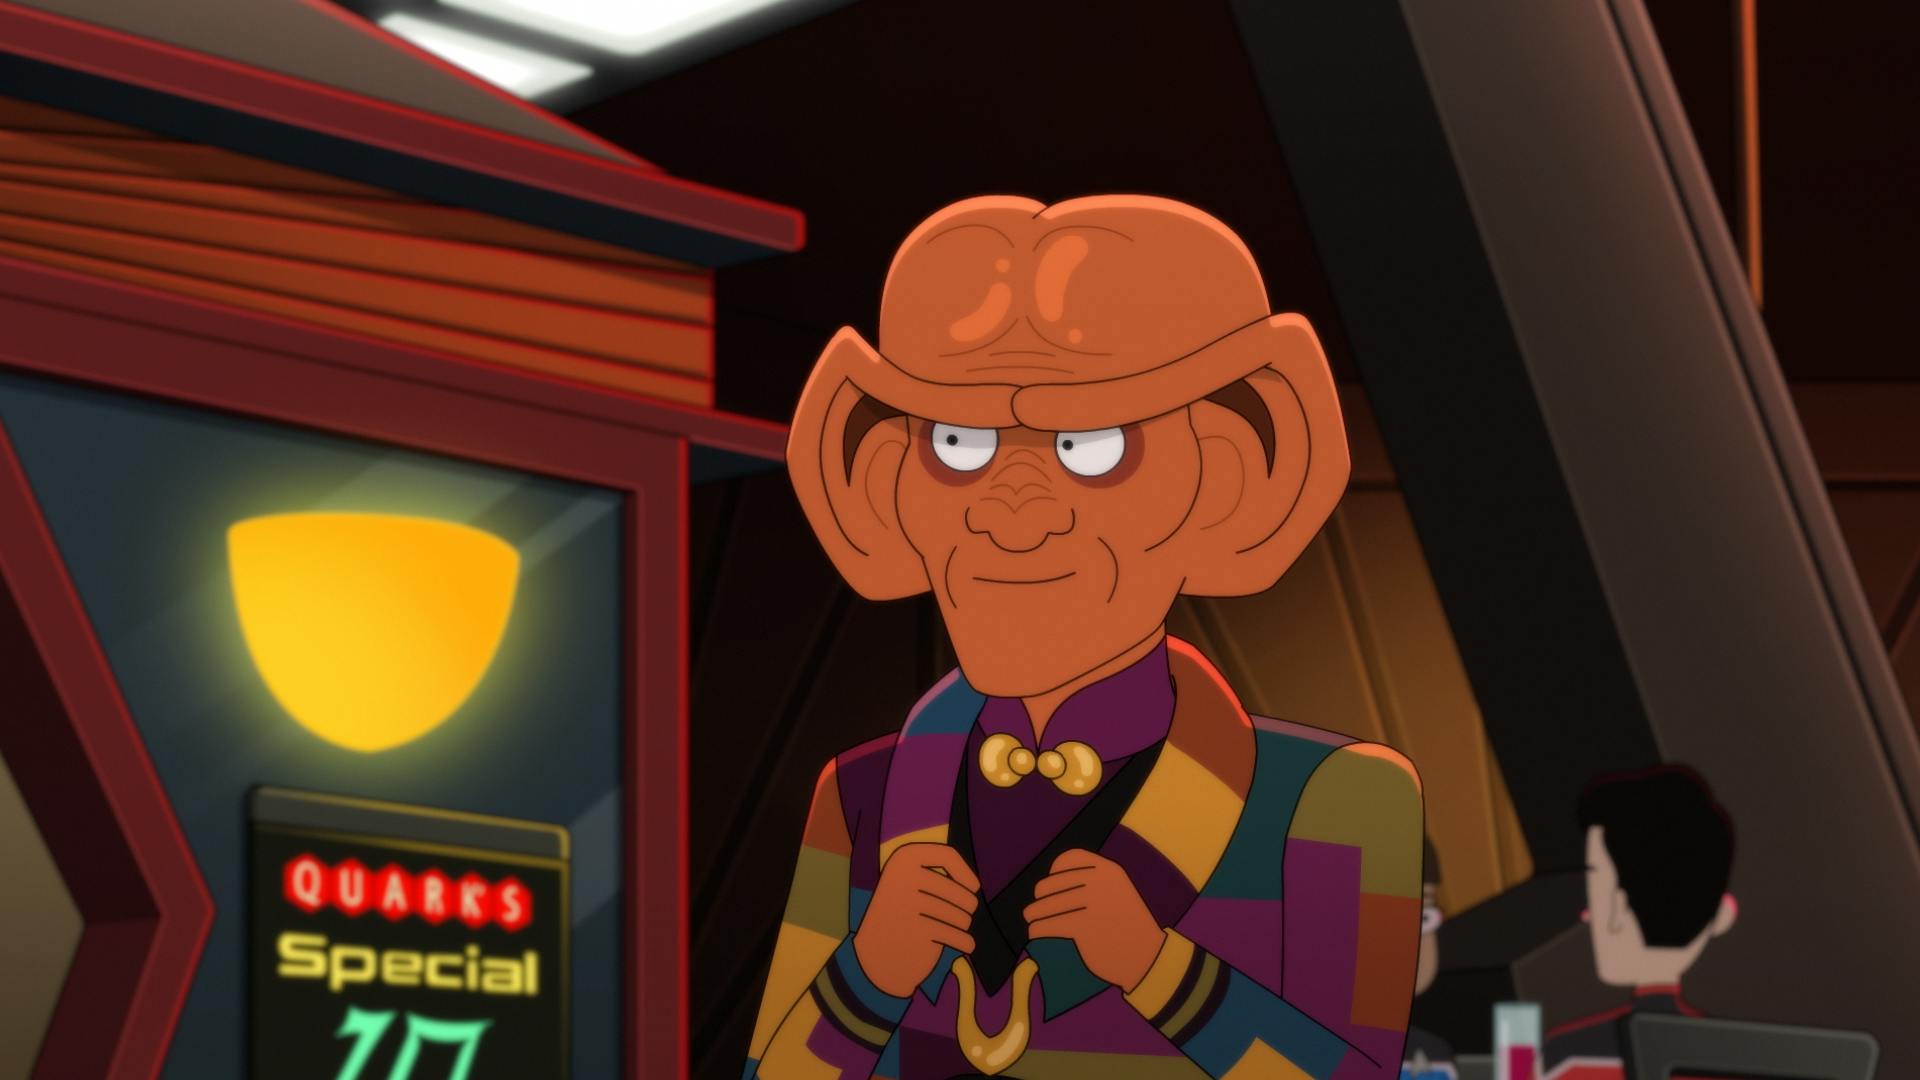 Quark shows off his bar in Star Trek: Lower Decks